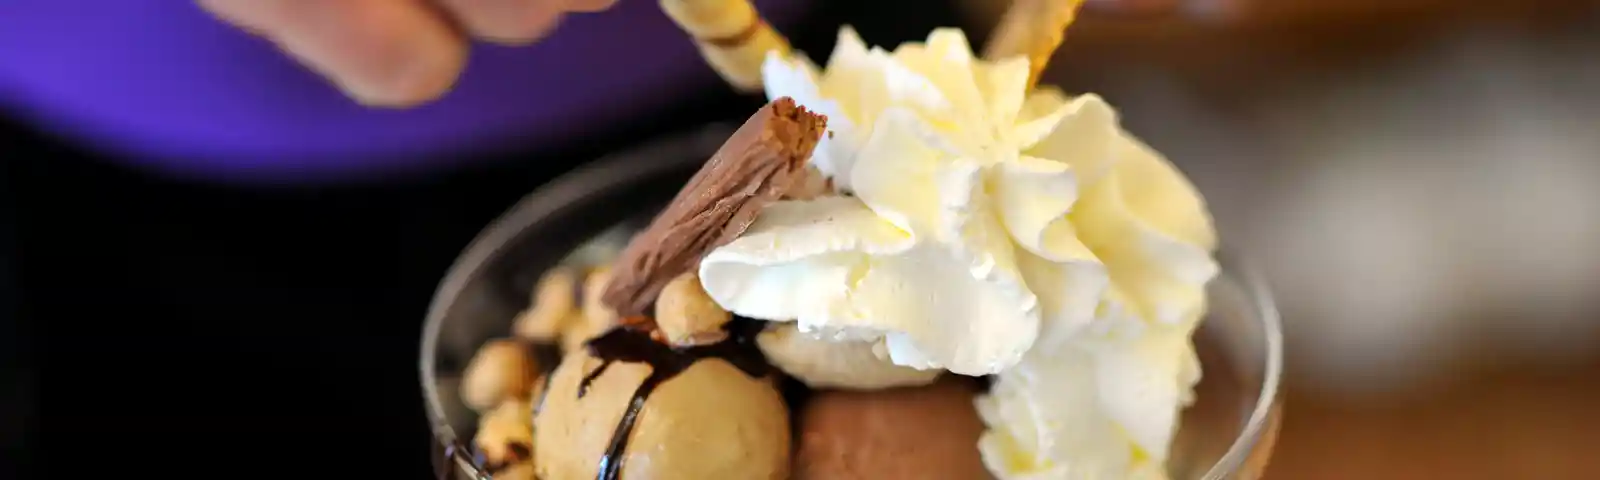 Ice Cream Sundae, Close Up Credit Thanet Tourism